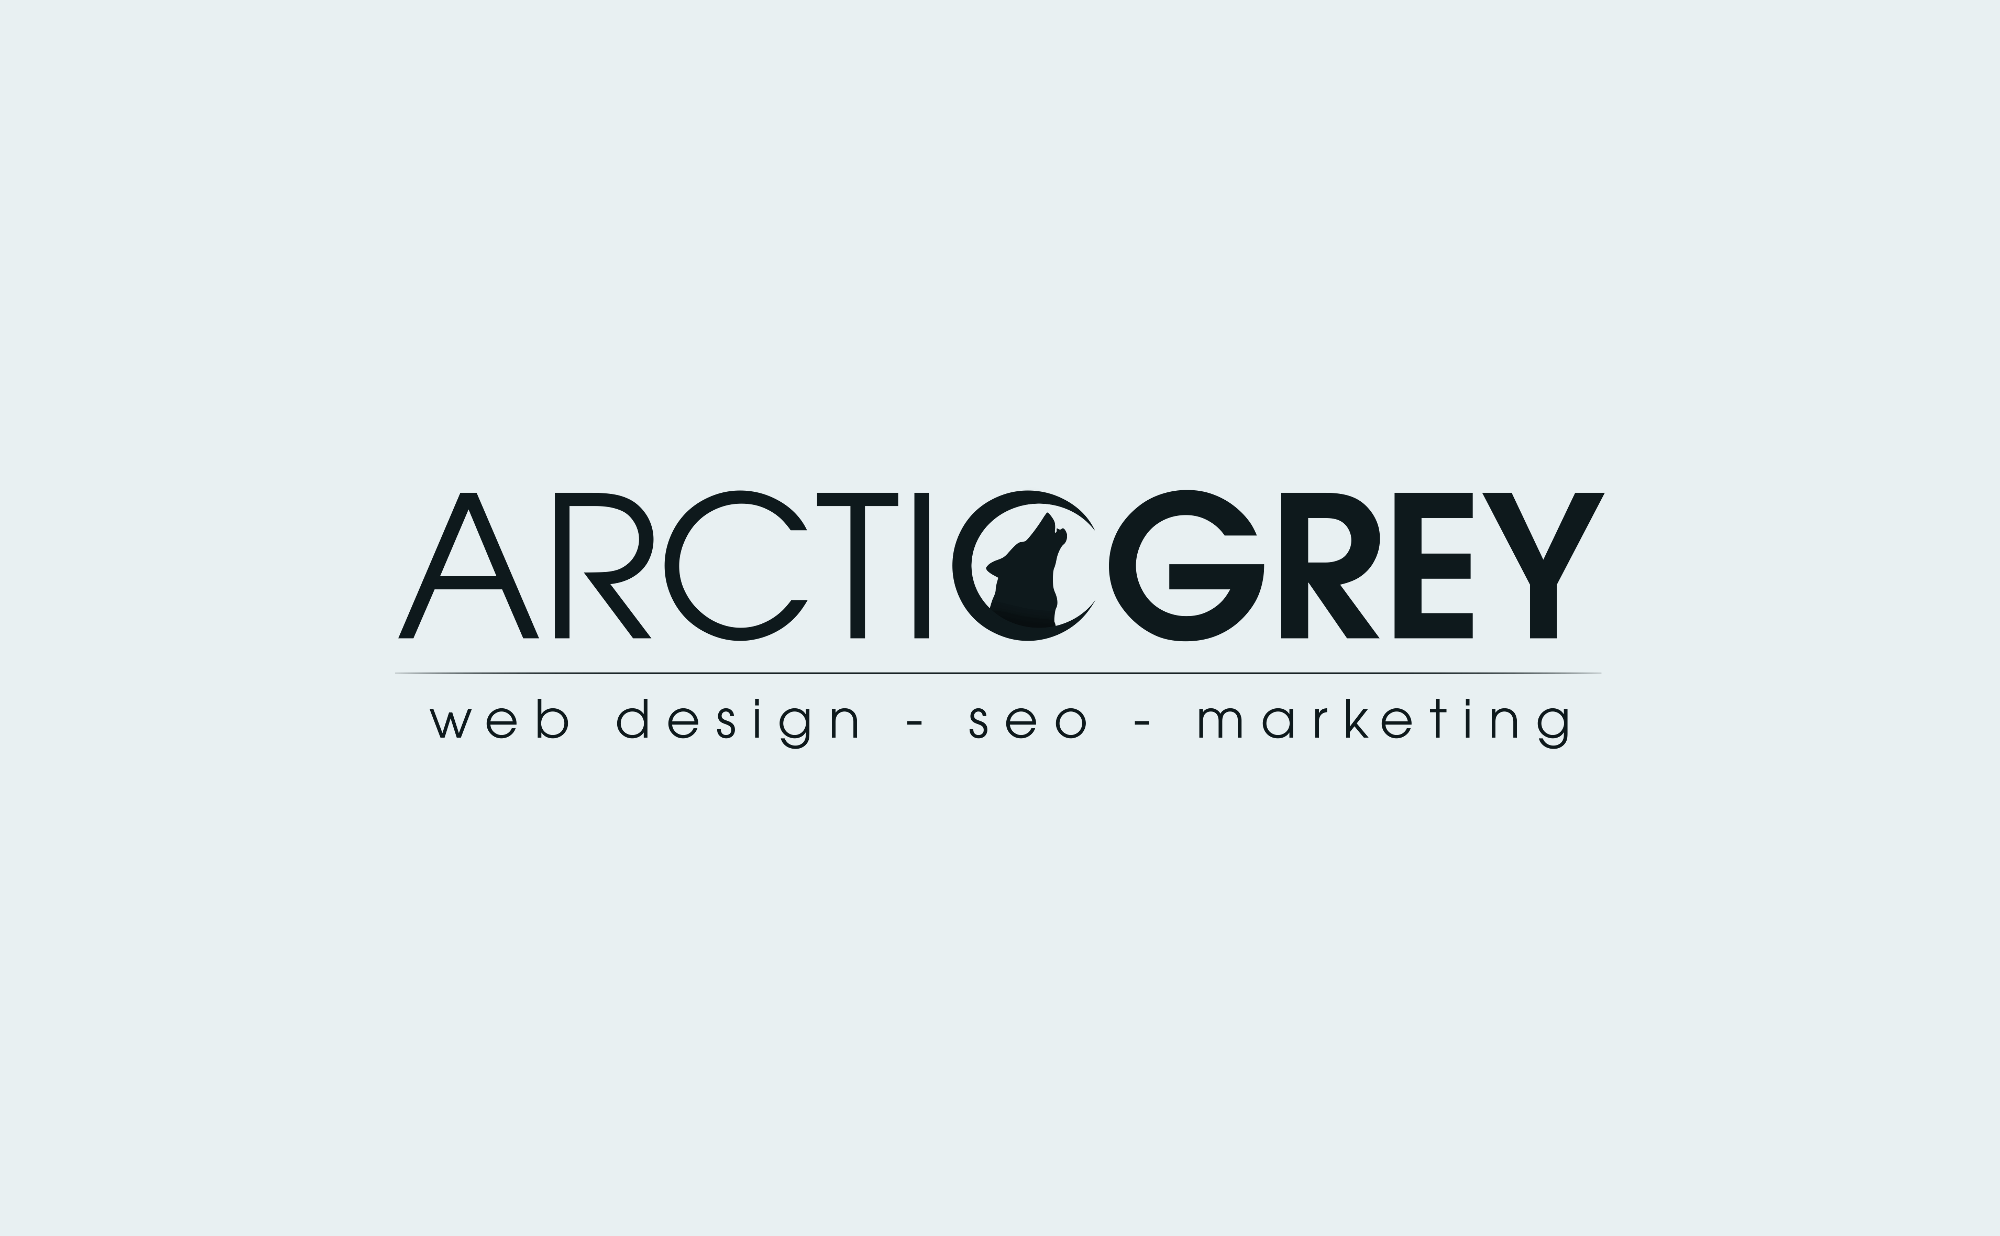 Top Shopify Design Firm Logo: Arctic Grey Inc